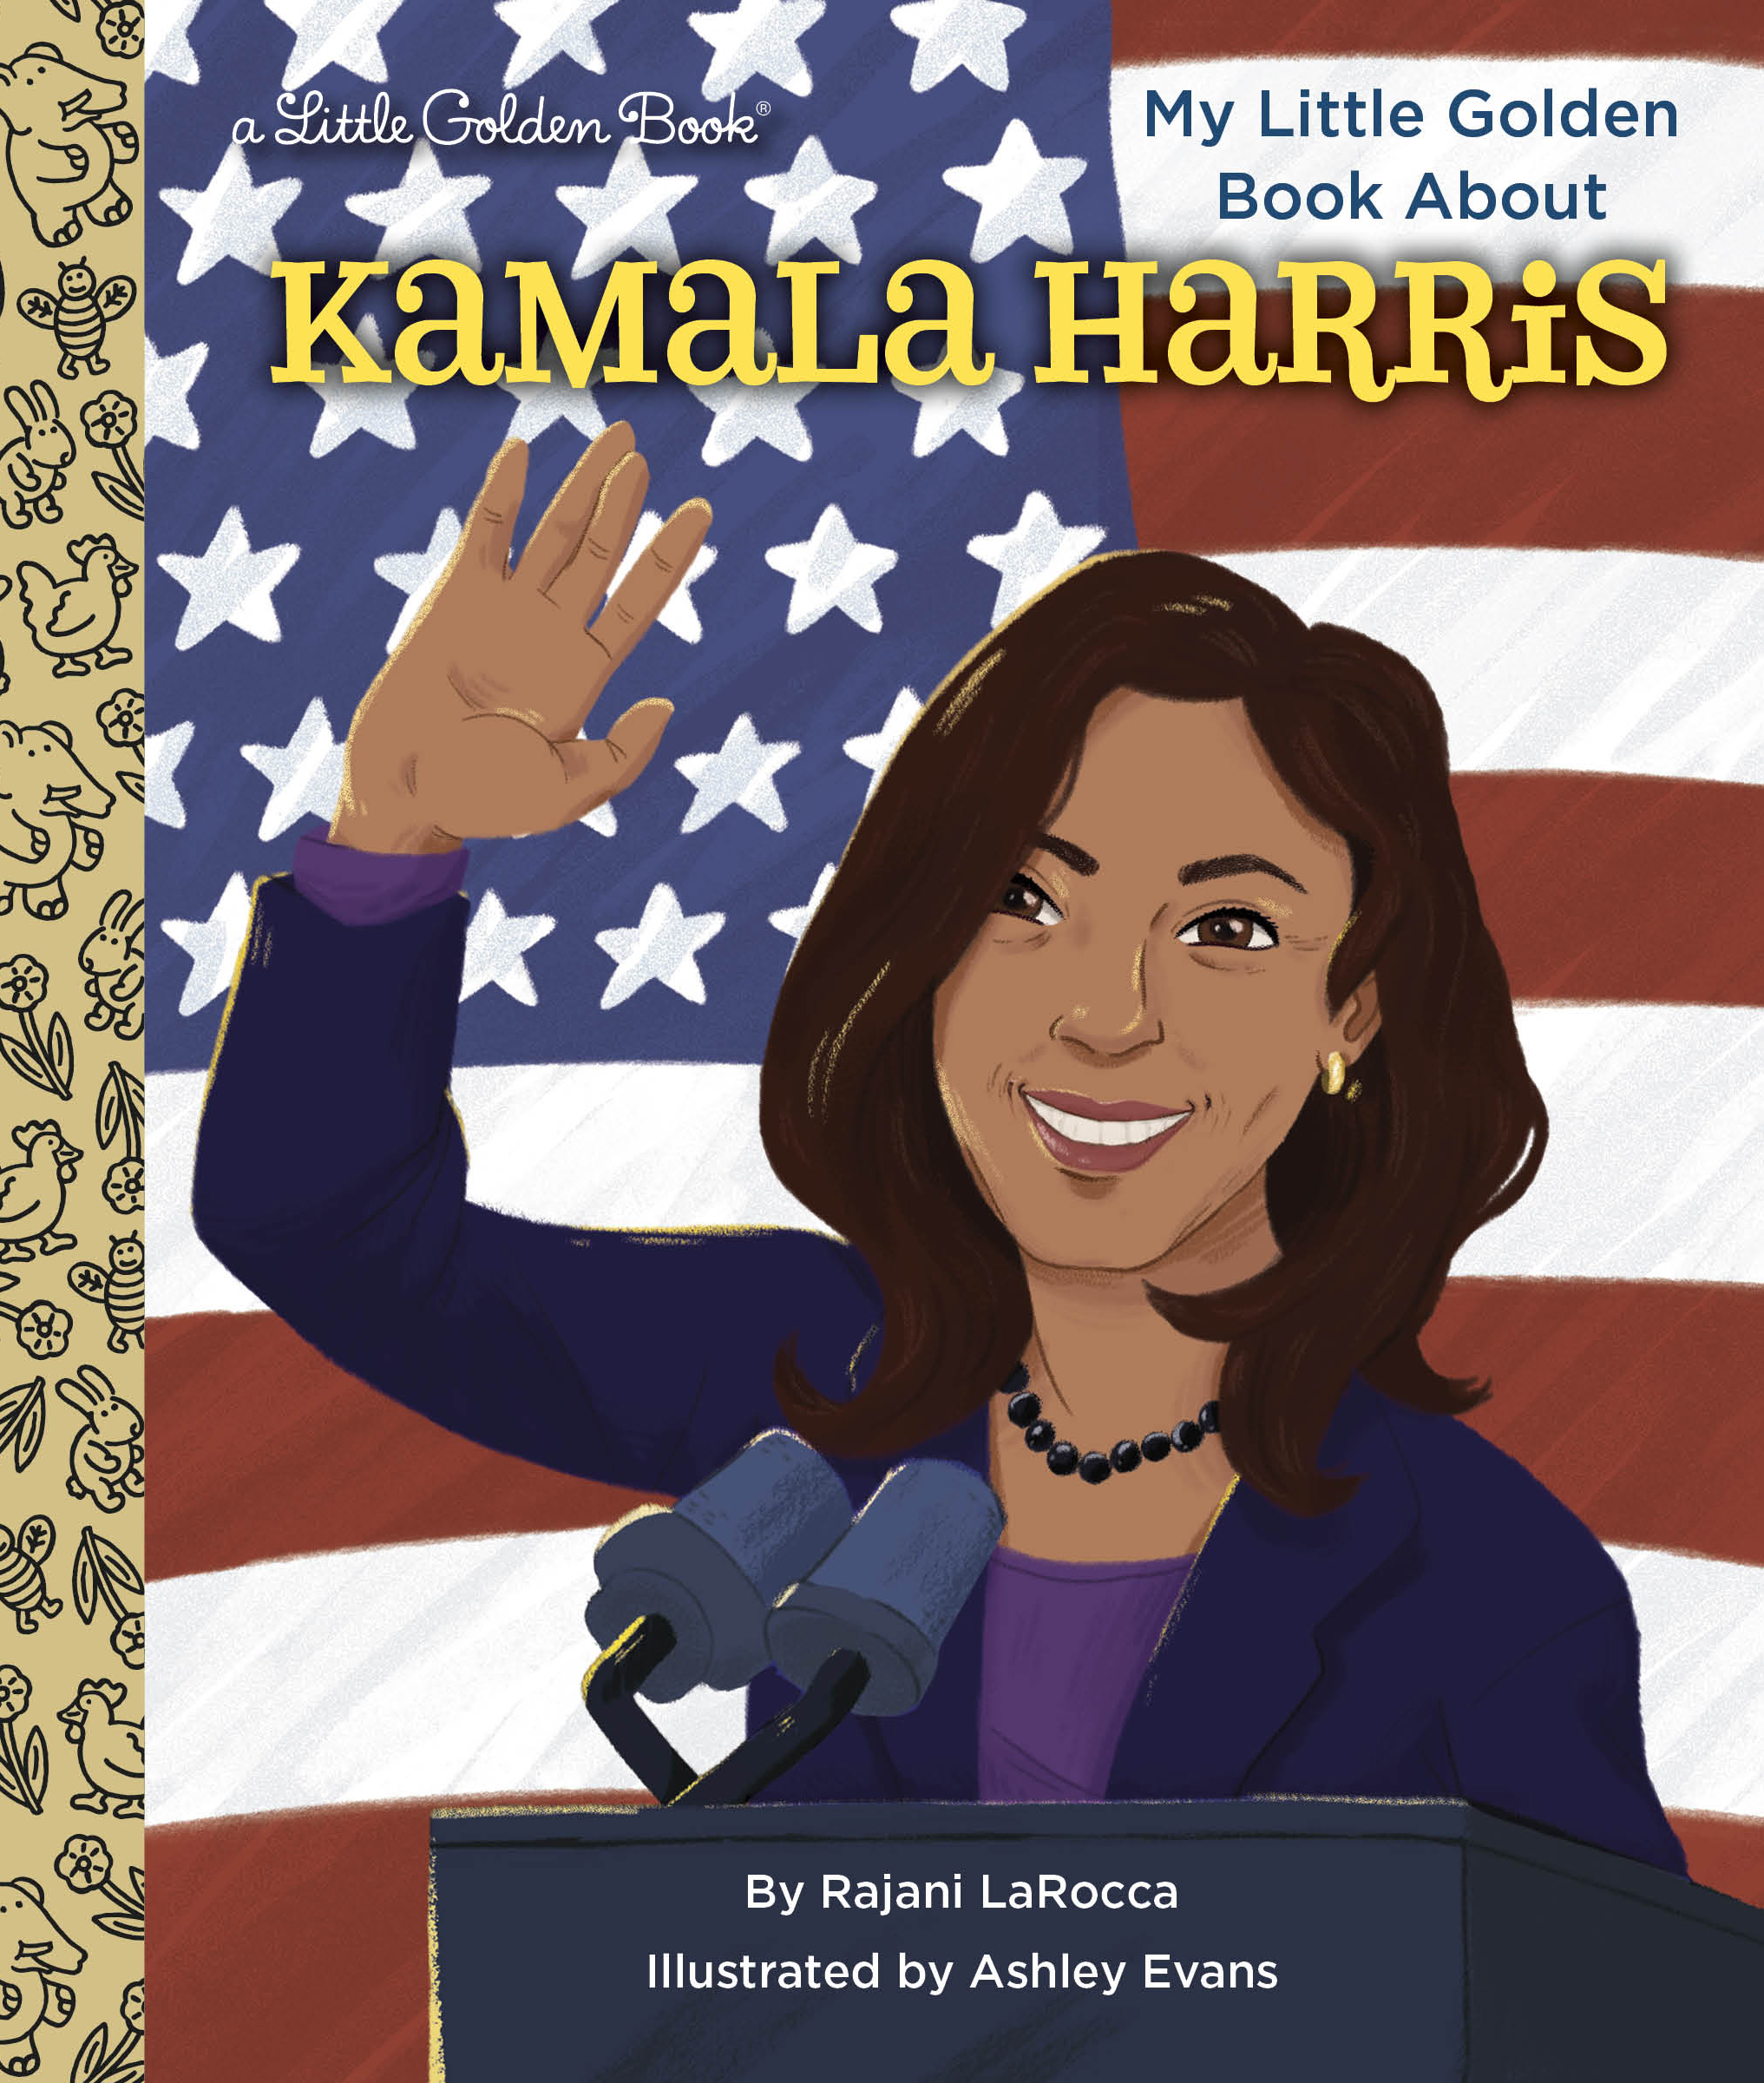 My Little Golden Book About Kamala Harris